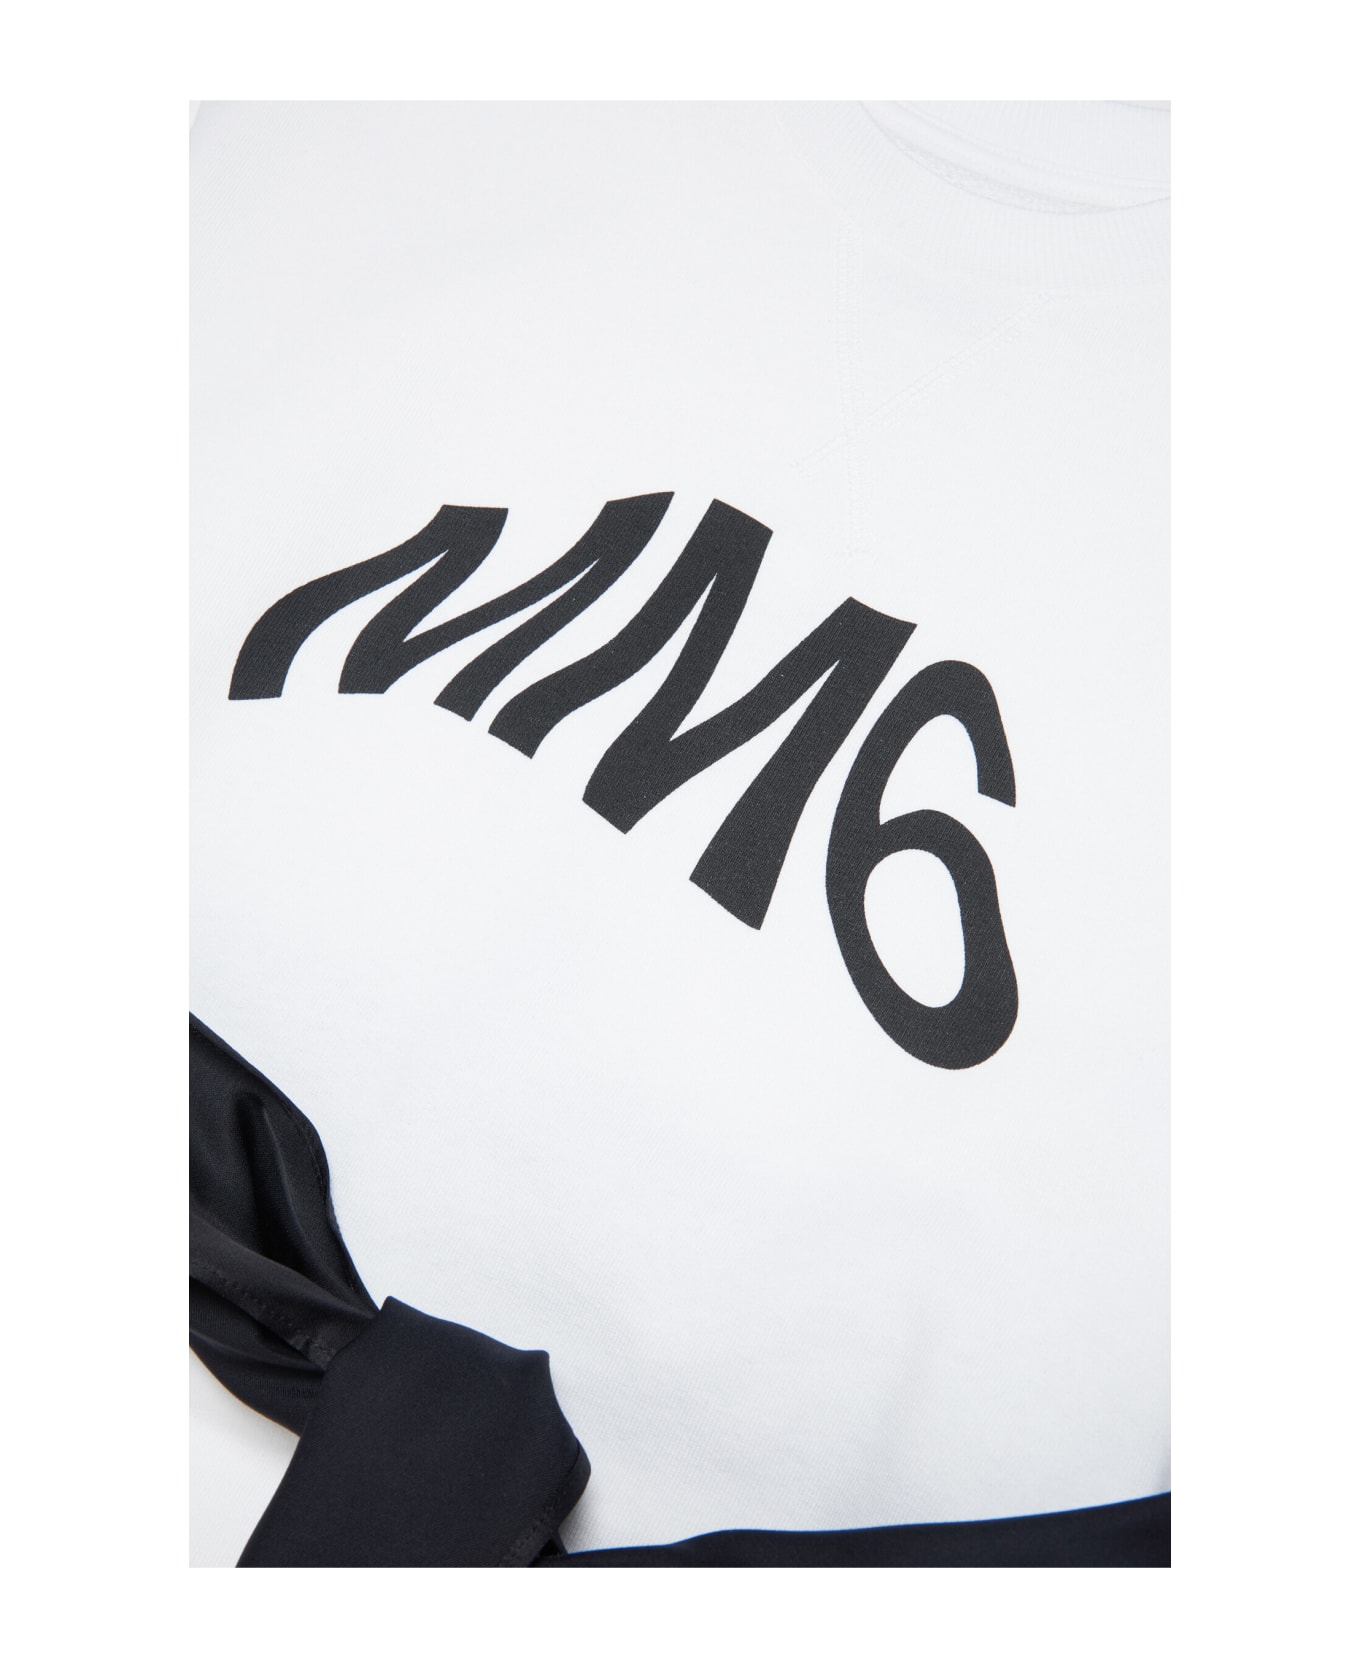 MM6 Maison Margiela Mm6d49u Dress Maison Margiela Black And White Cotton Dress With Mm6 Logo - M6c01